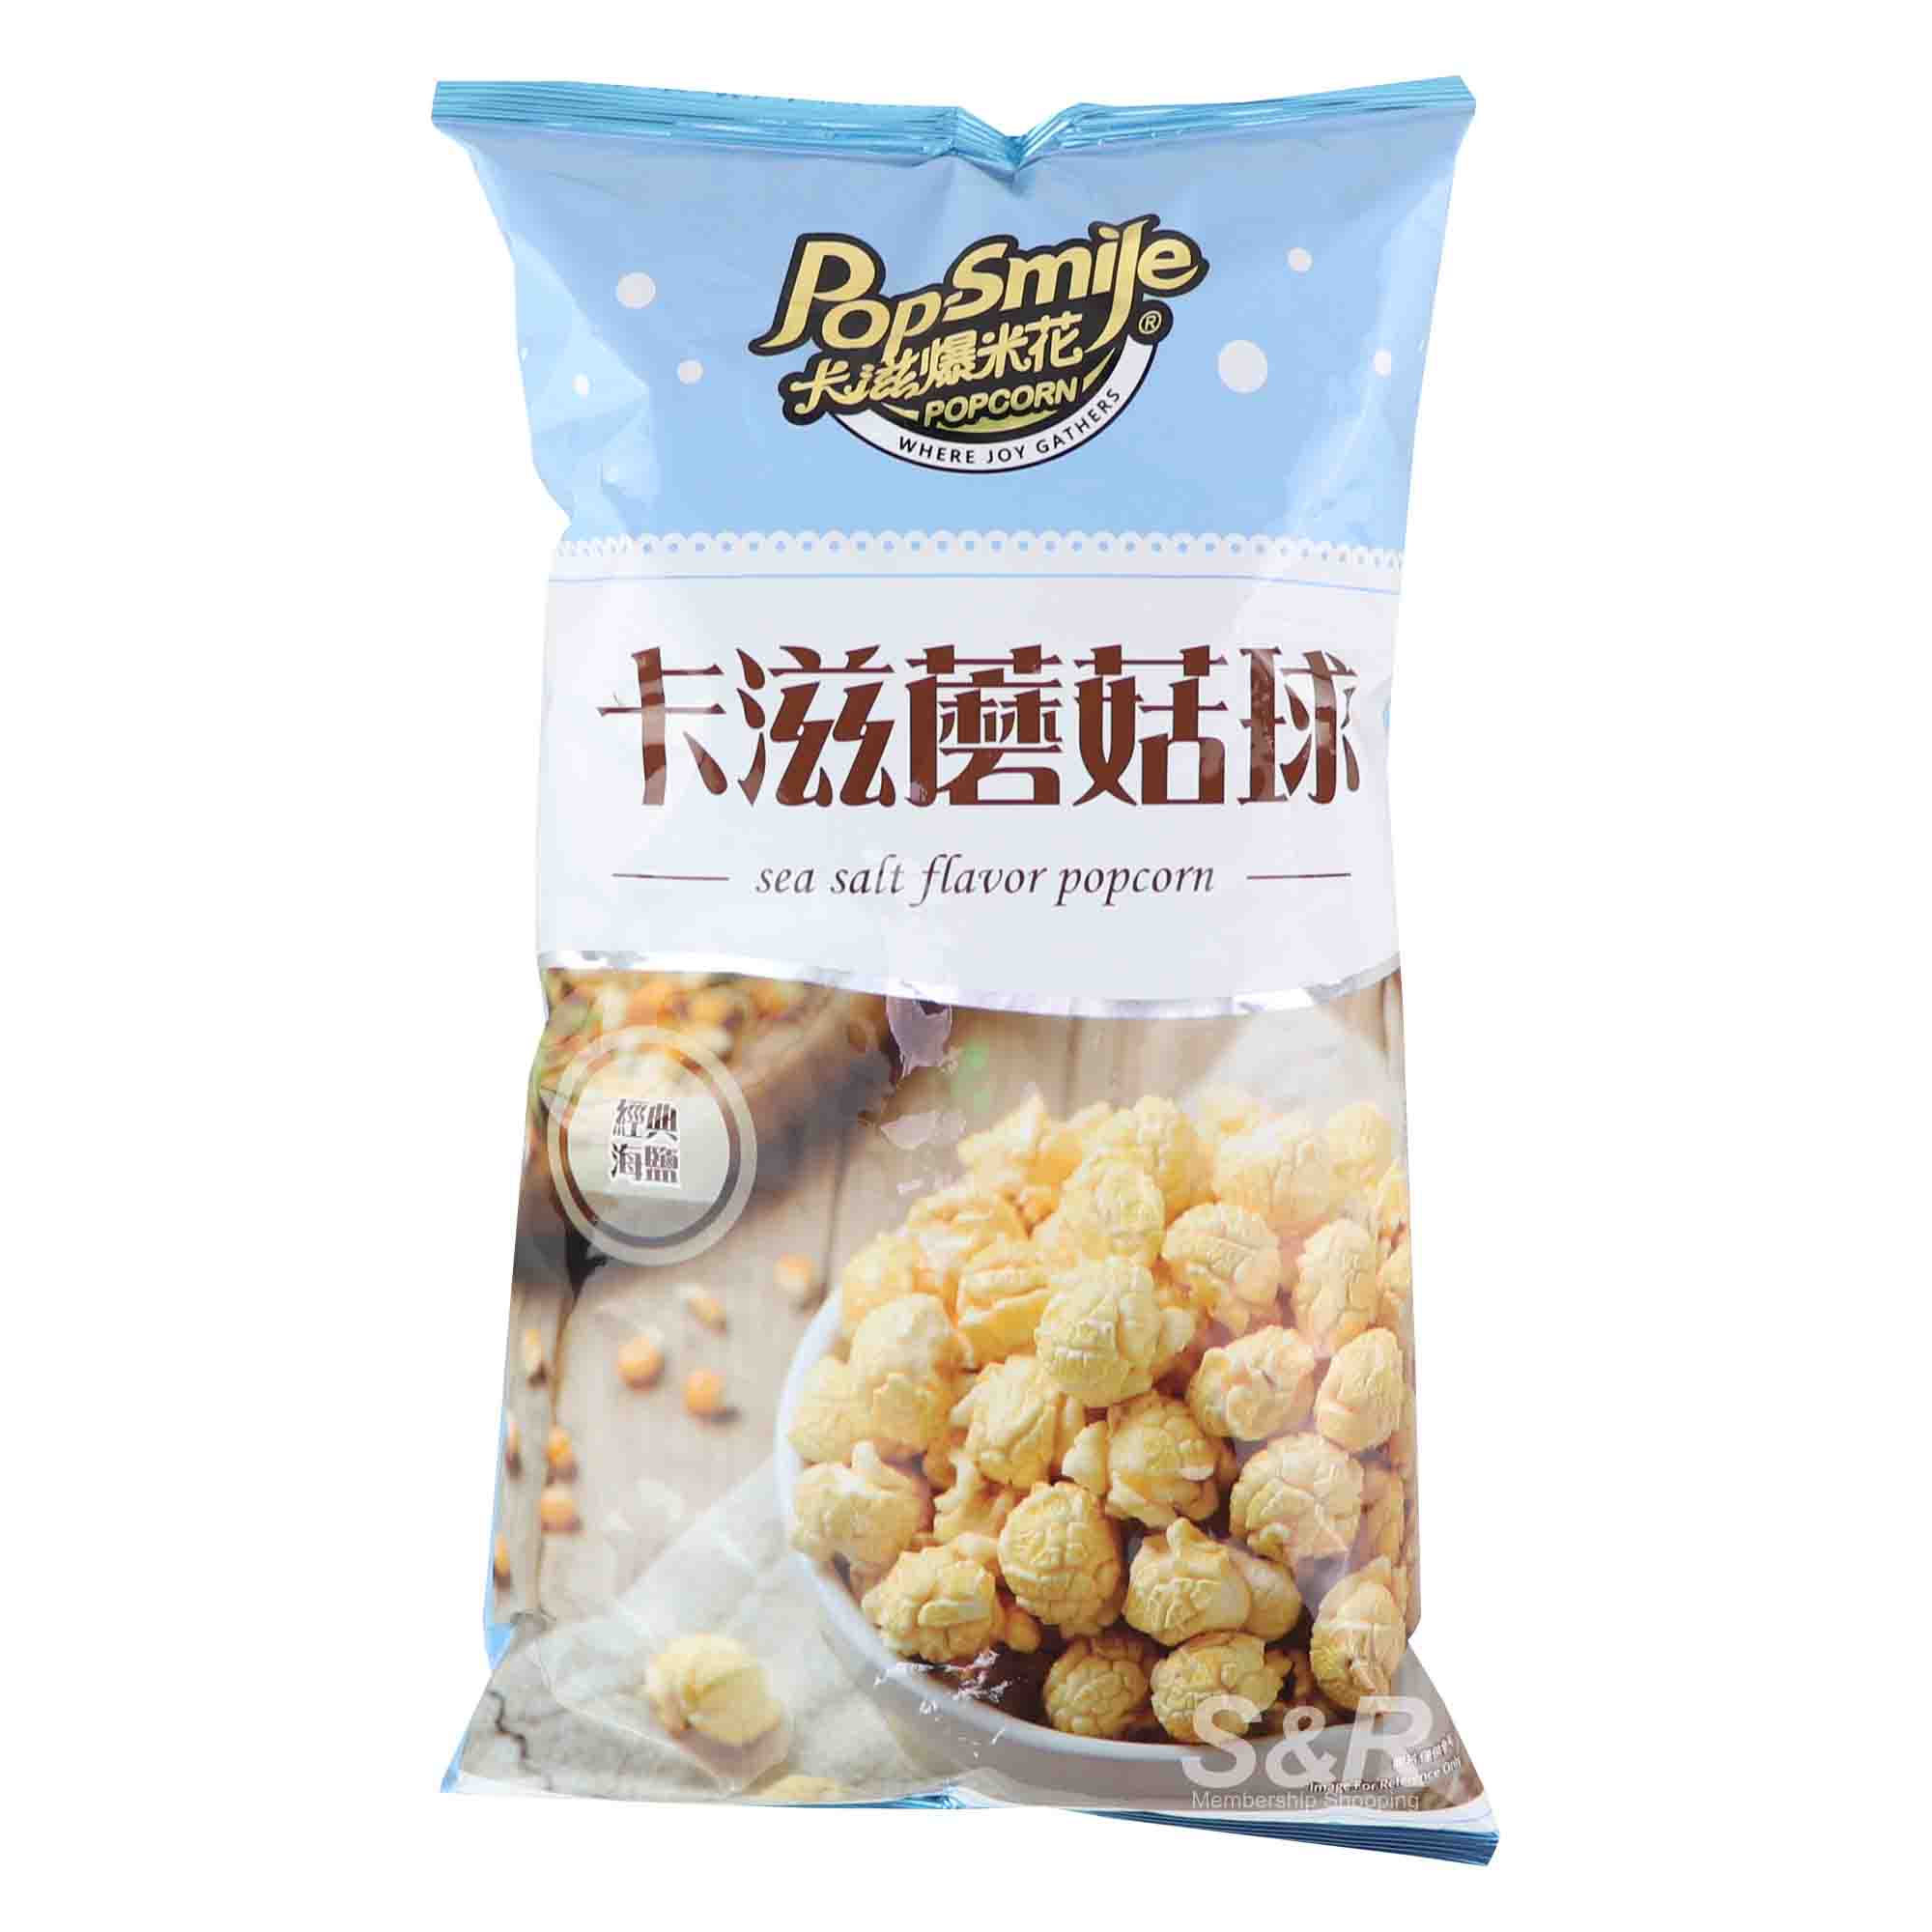 Pop-Smile Sea Salt Flavor Popcorn 100g